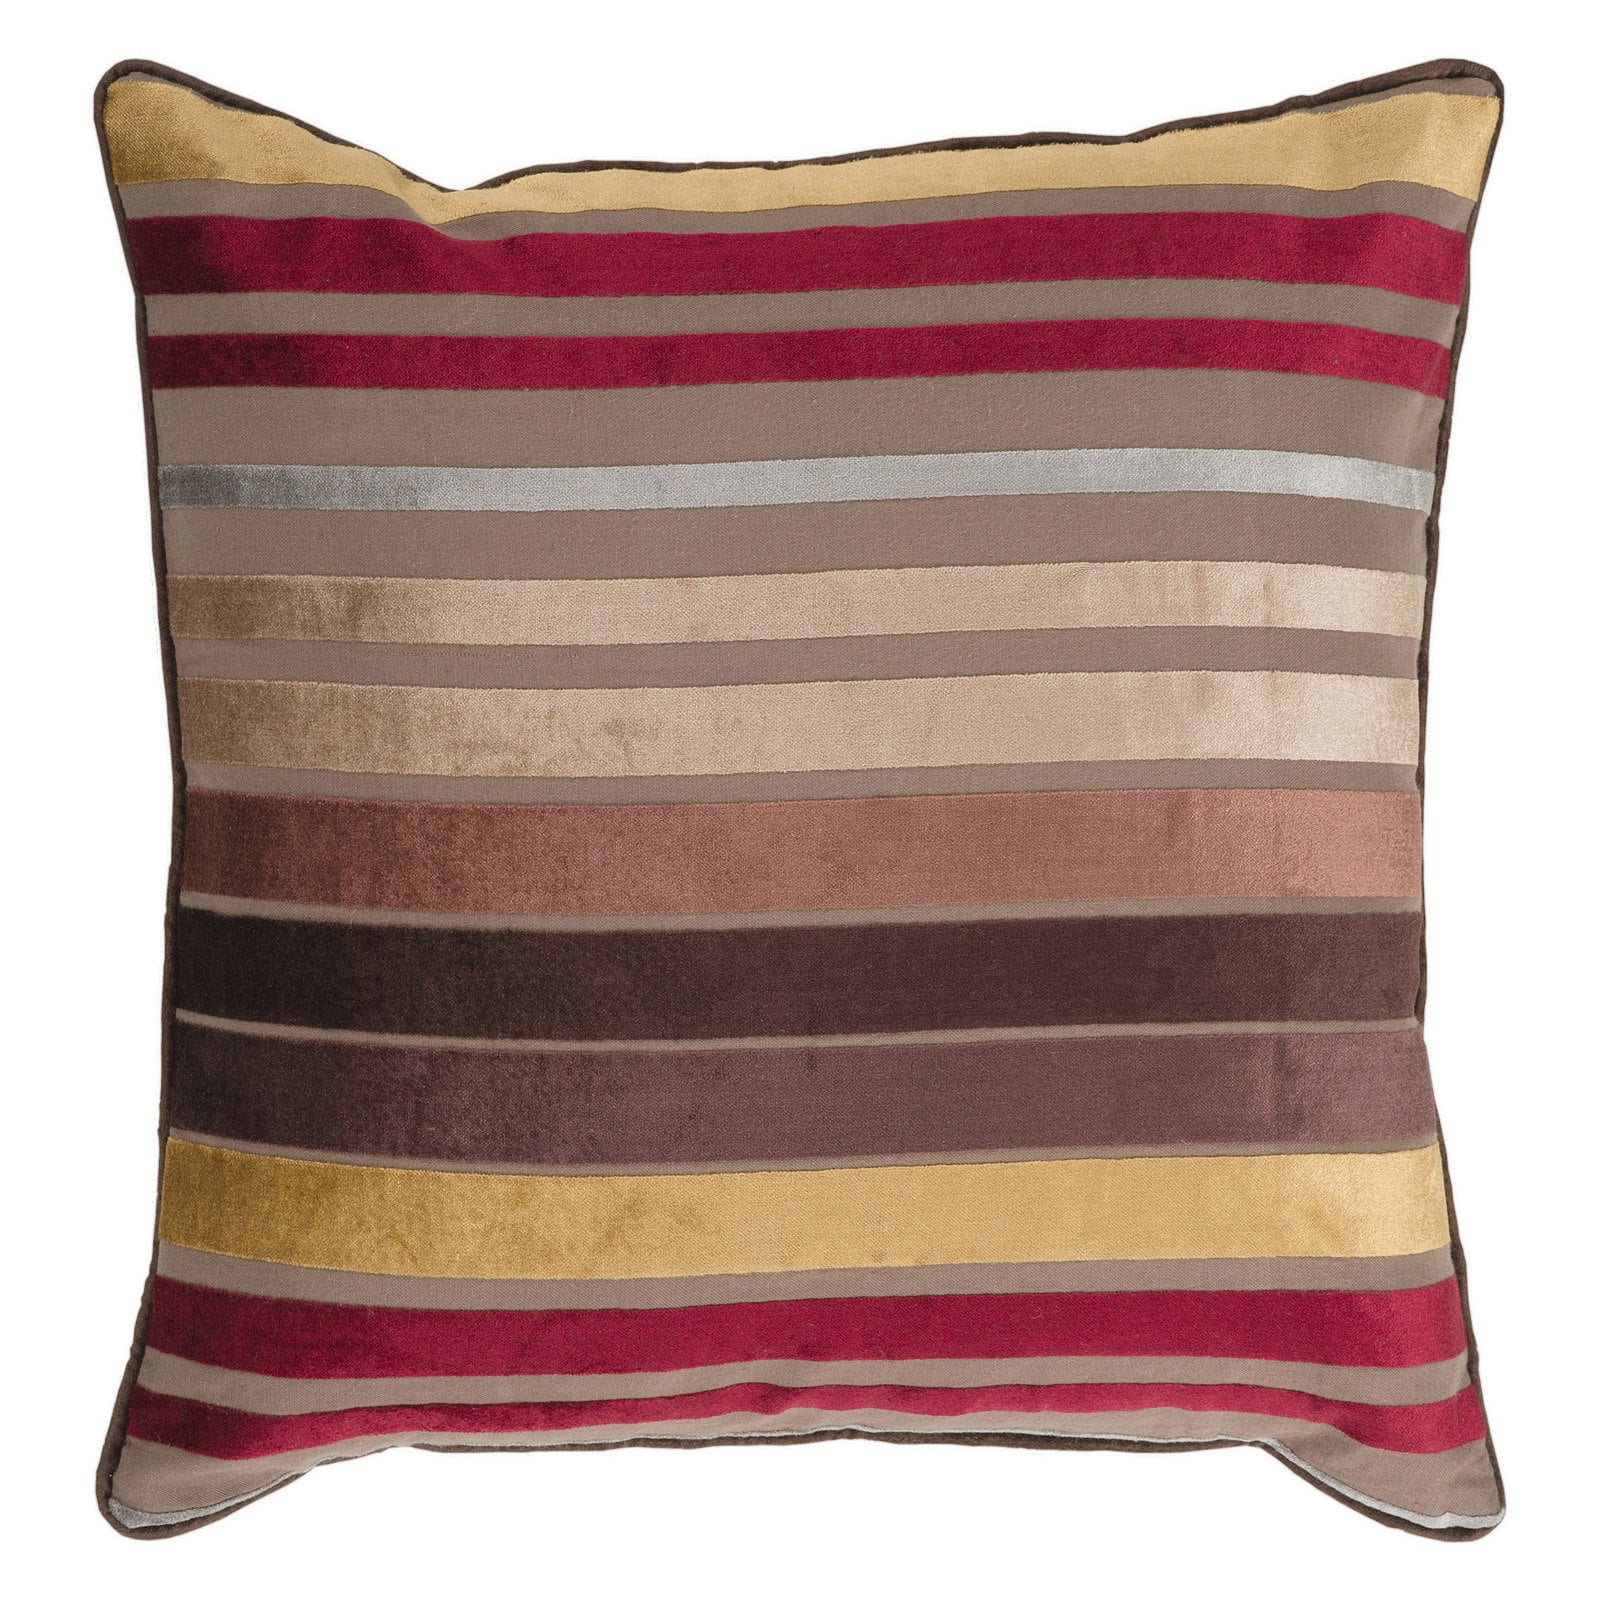 Surya Yarmouth Stripe Decorative Pillow - Brown - Walmart.com - Walmart.com